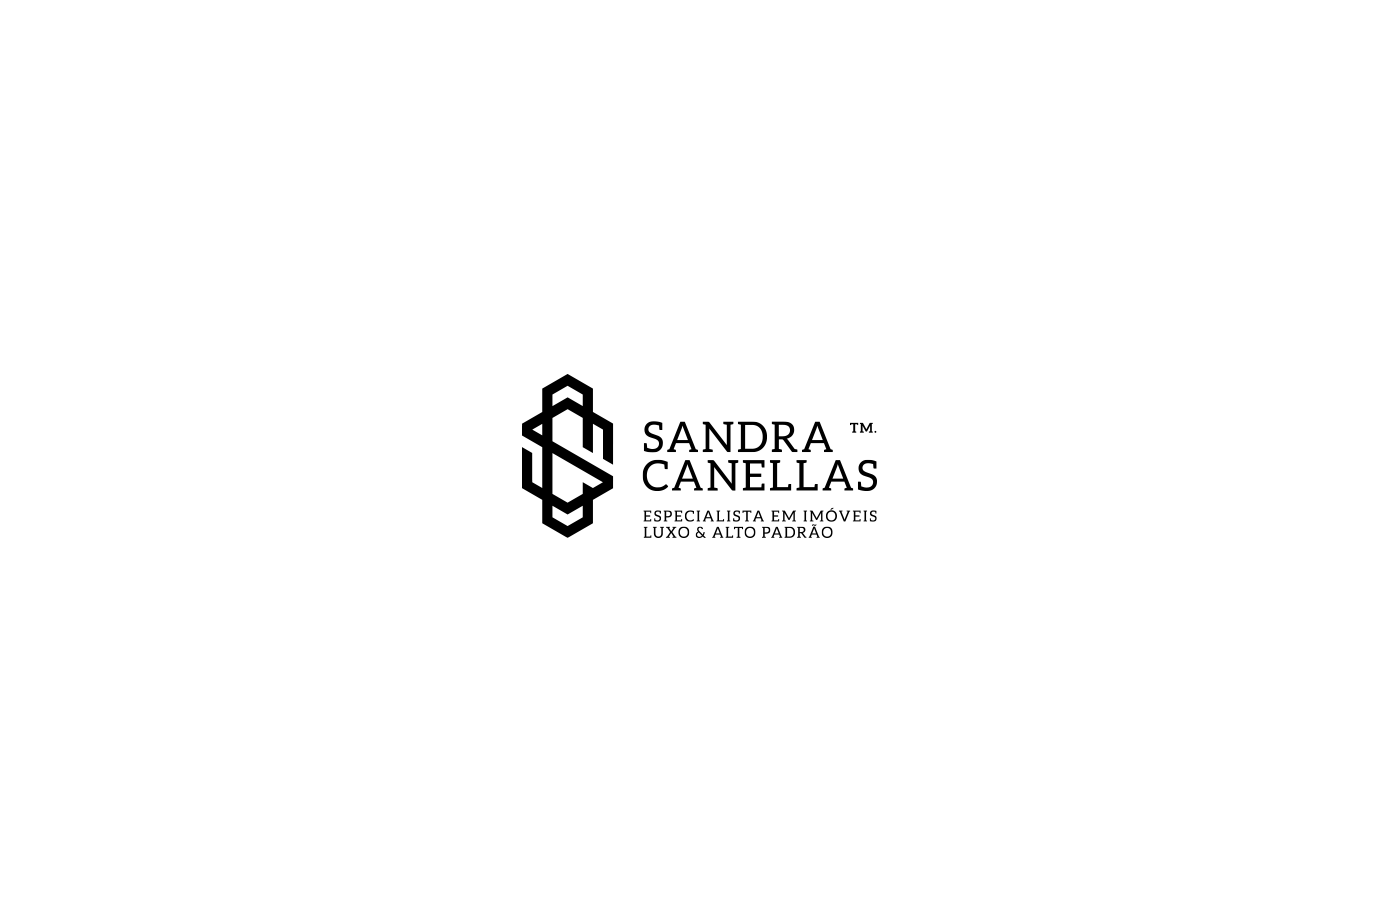 SANDRA identity visual Canellas luxury gold brand grid properties design